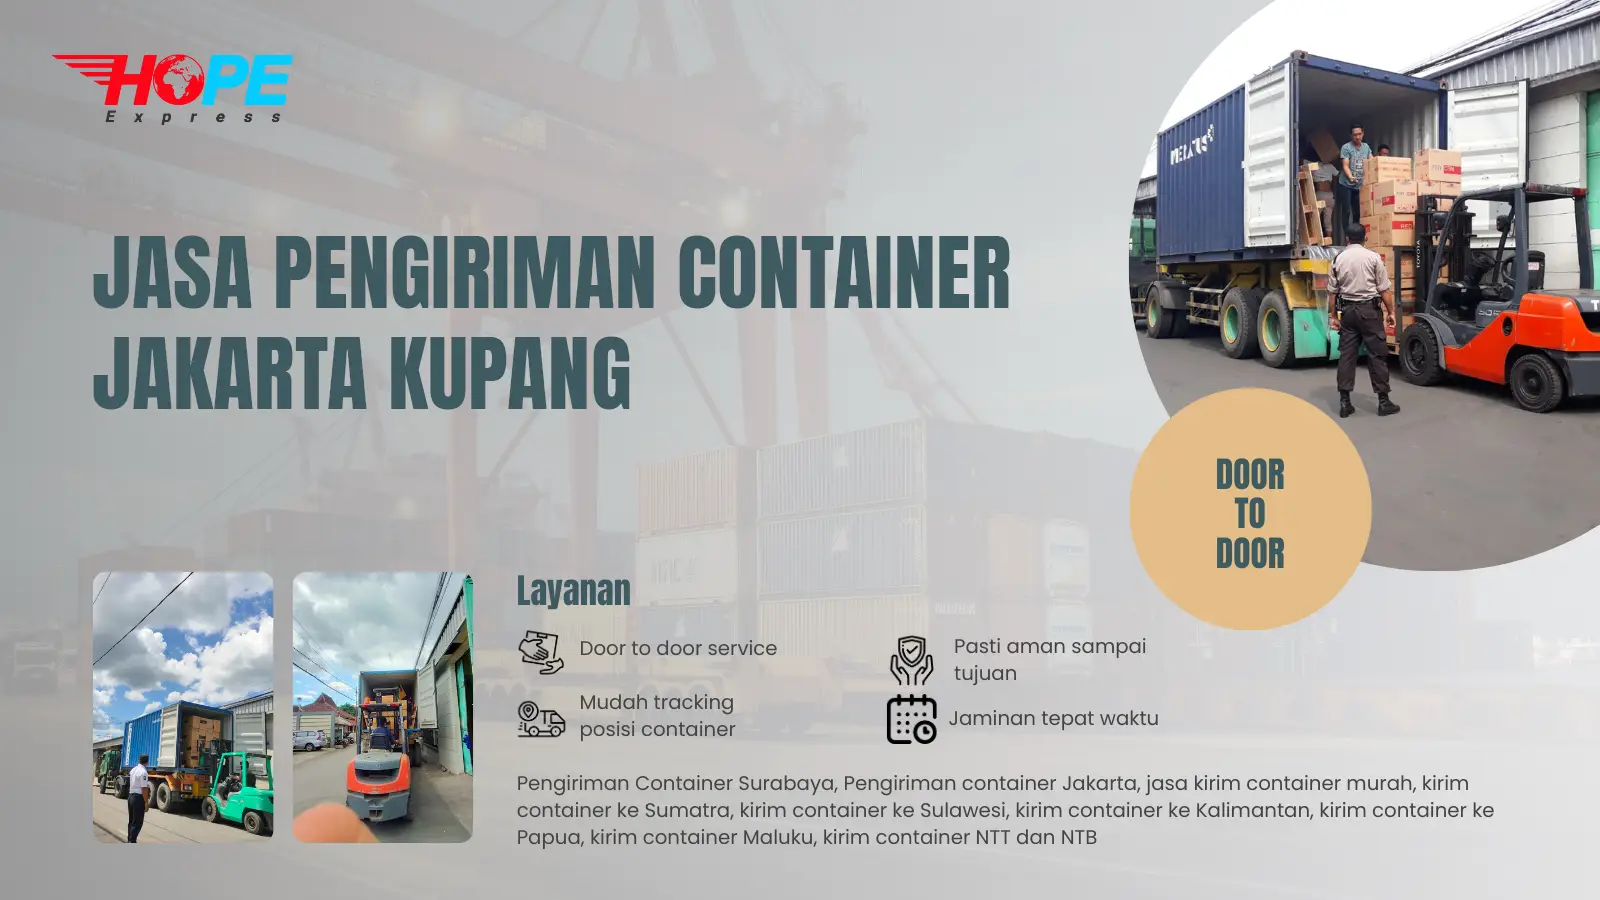 Jasa Pengiriman Container Jakarta Kupang